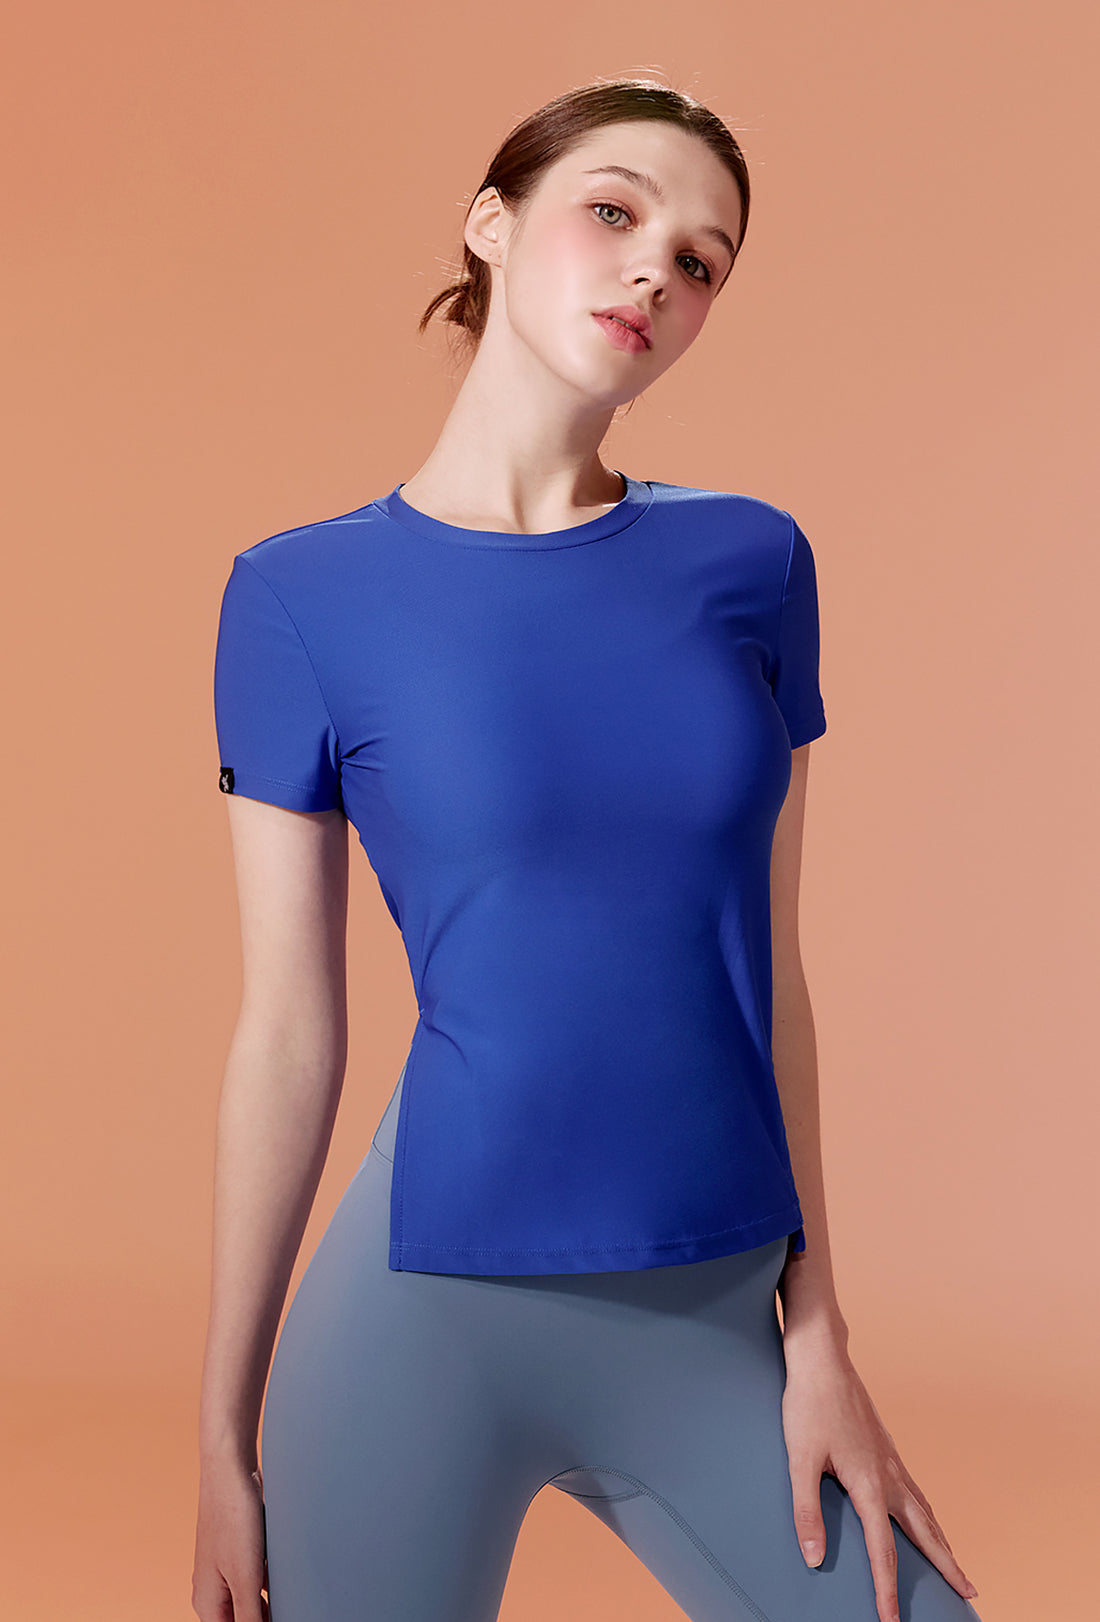 Air Bounce Shirring Short Sleeve - Directoire Blue